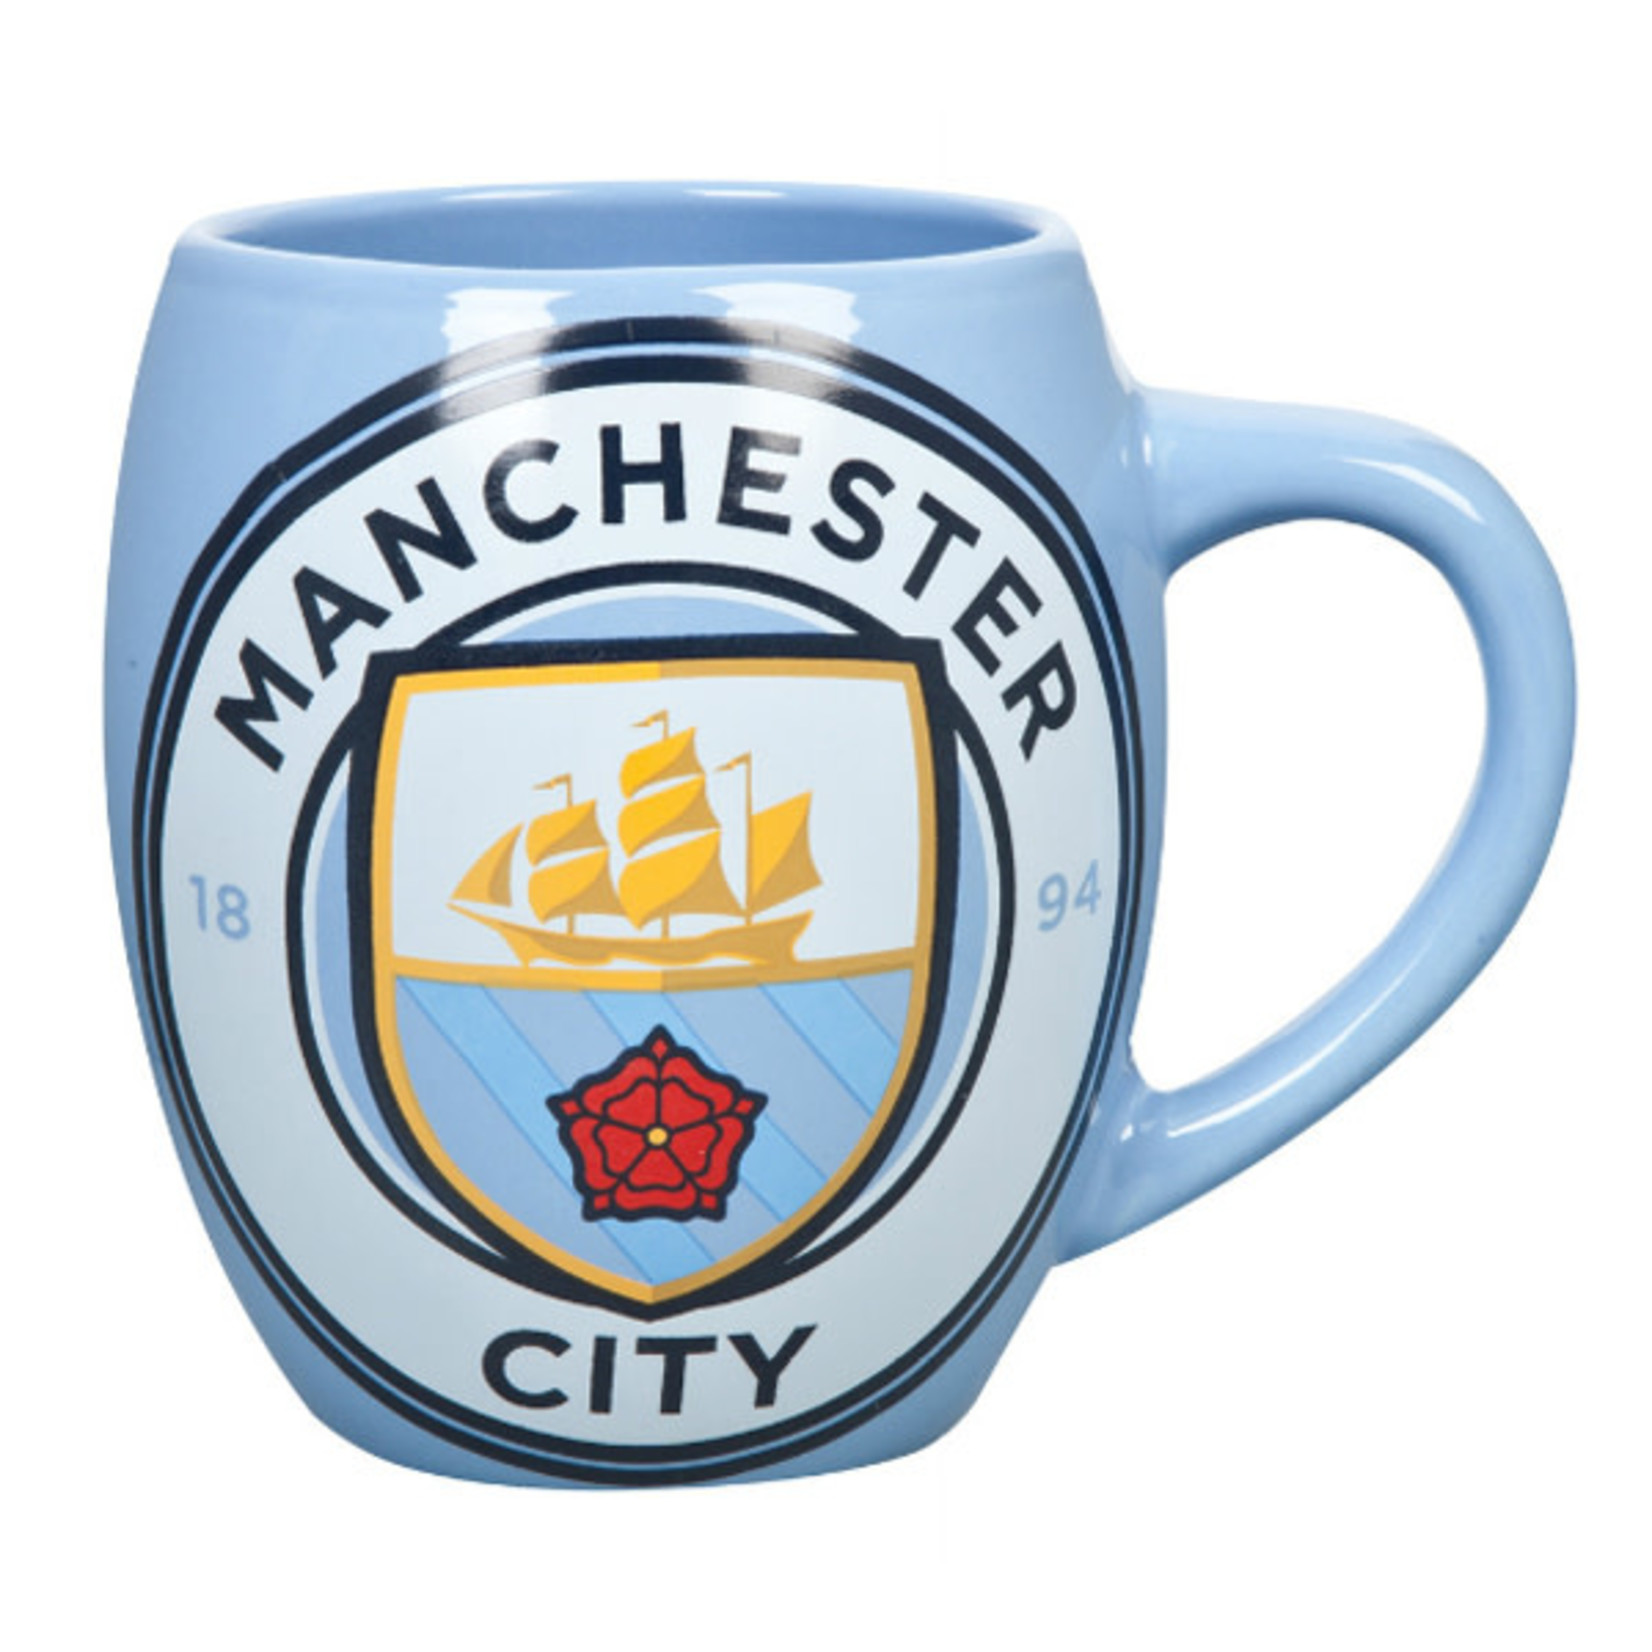 Mimi Imports Manchester City Tea Tub Mug